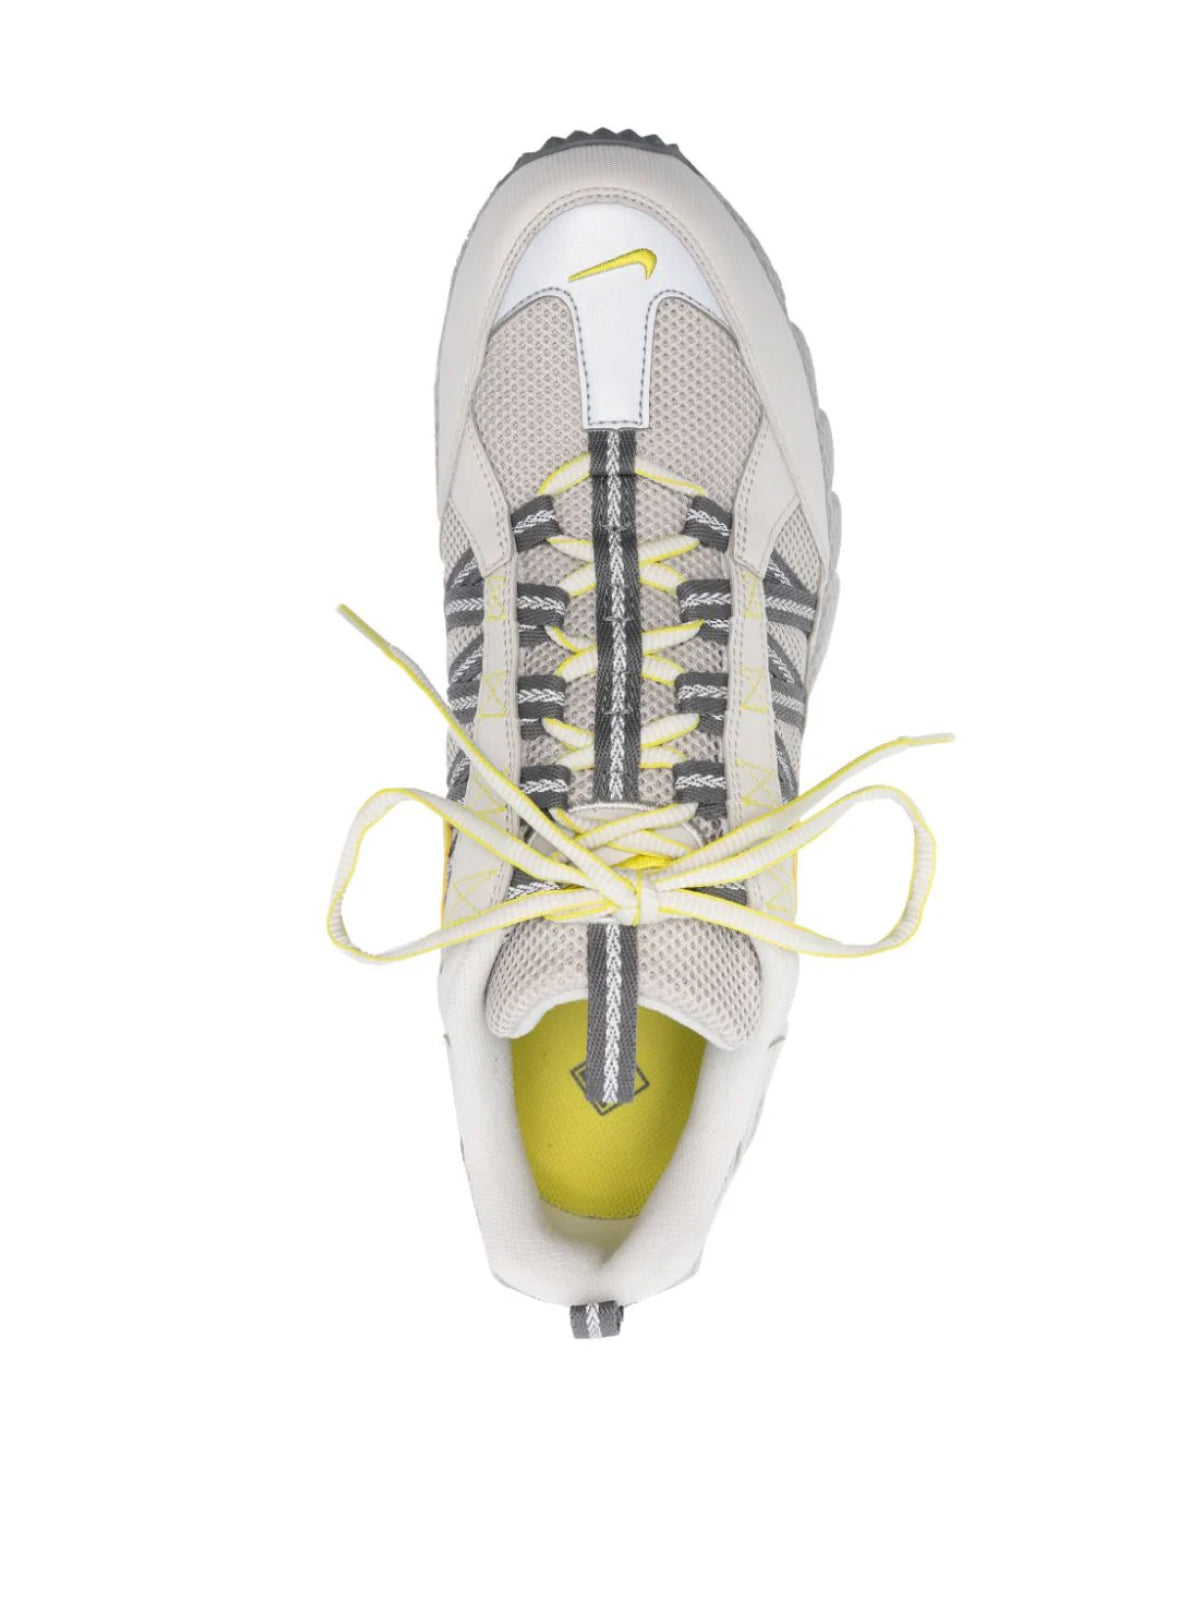 Nike-OUTLET-SALE-Air Humara Light Bone Sneakers-ARCHIVIST